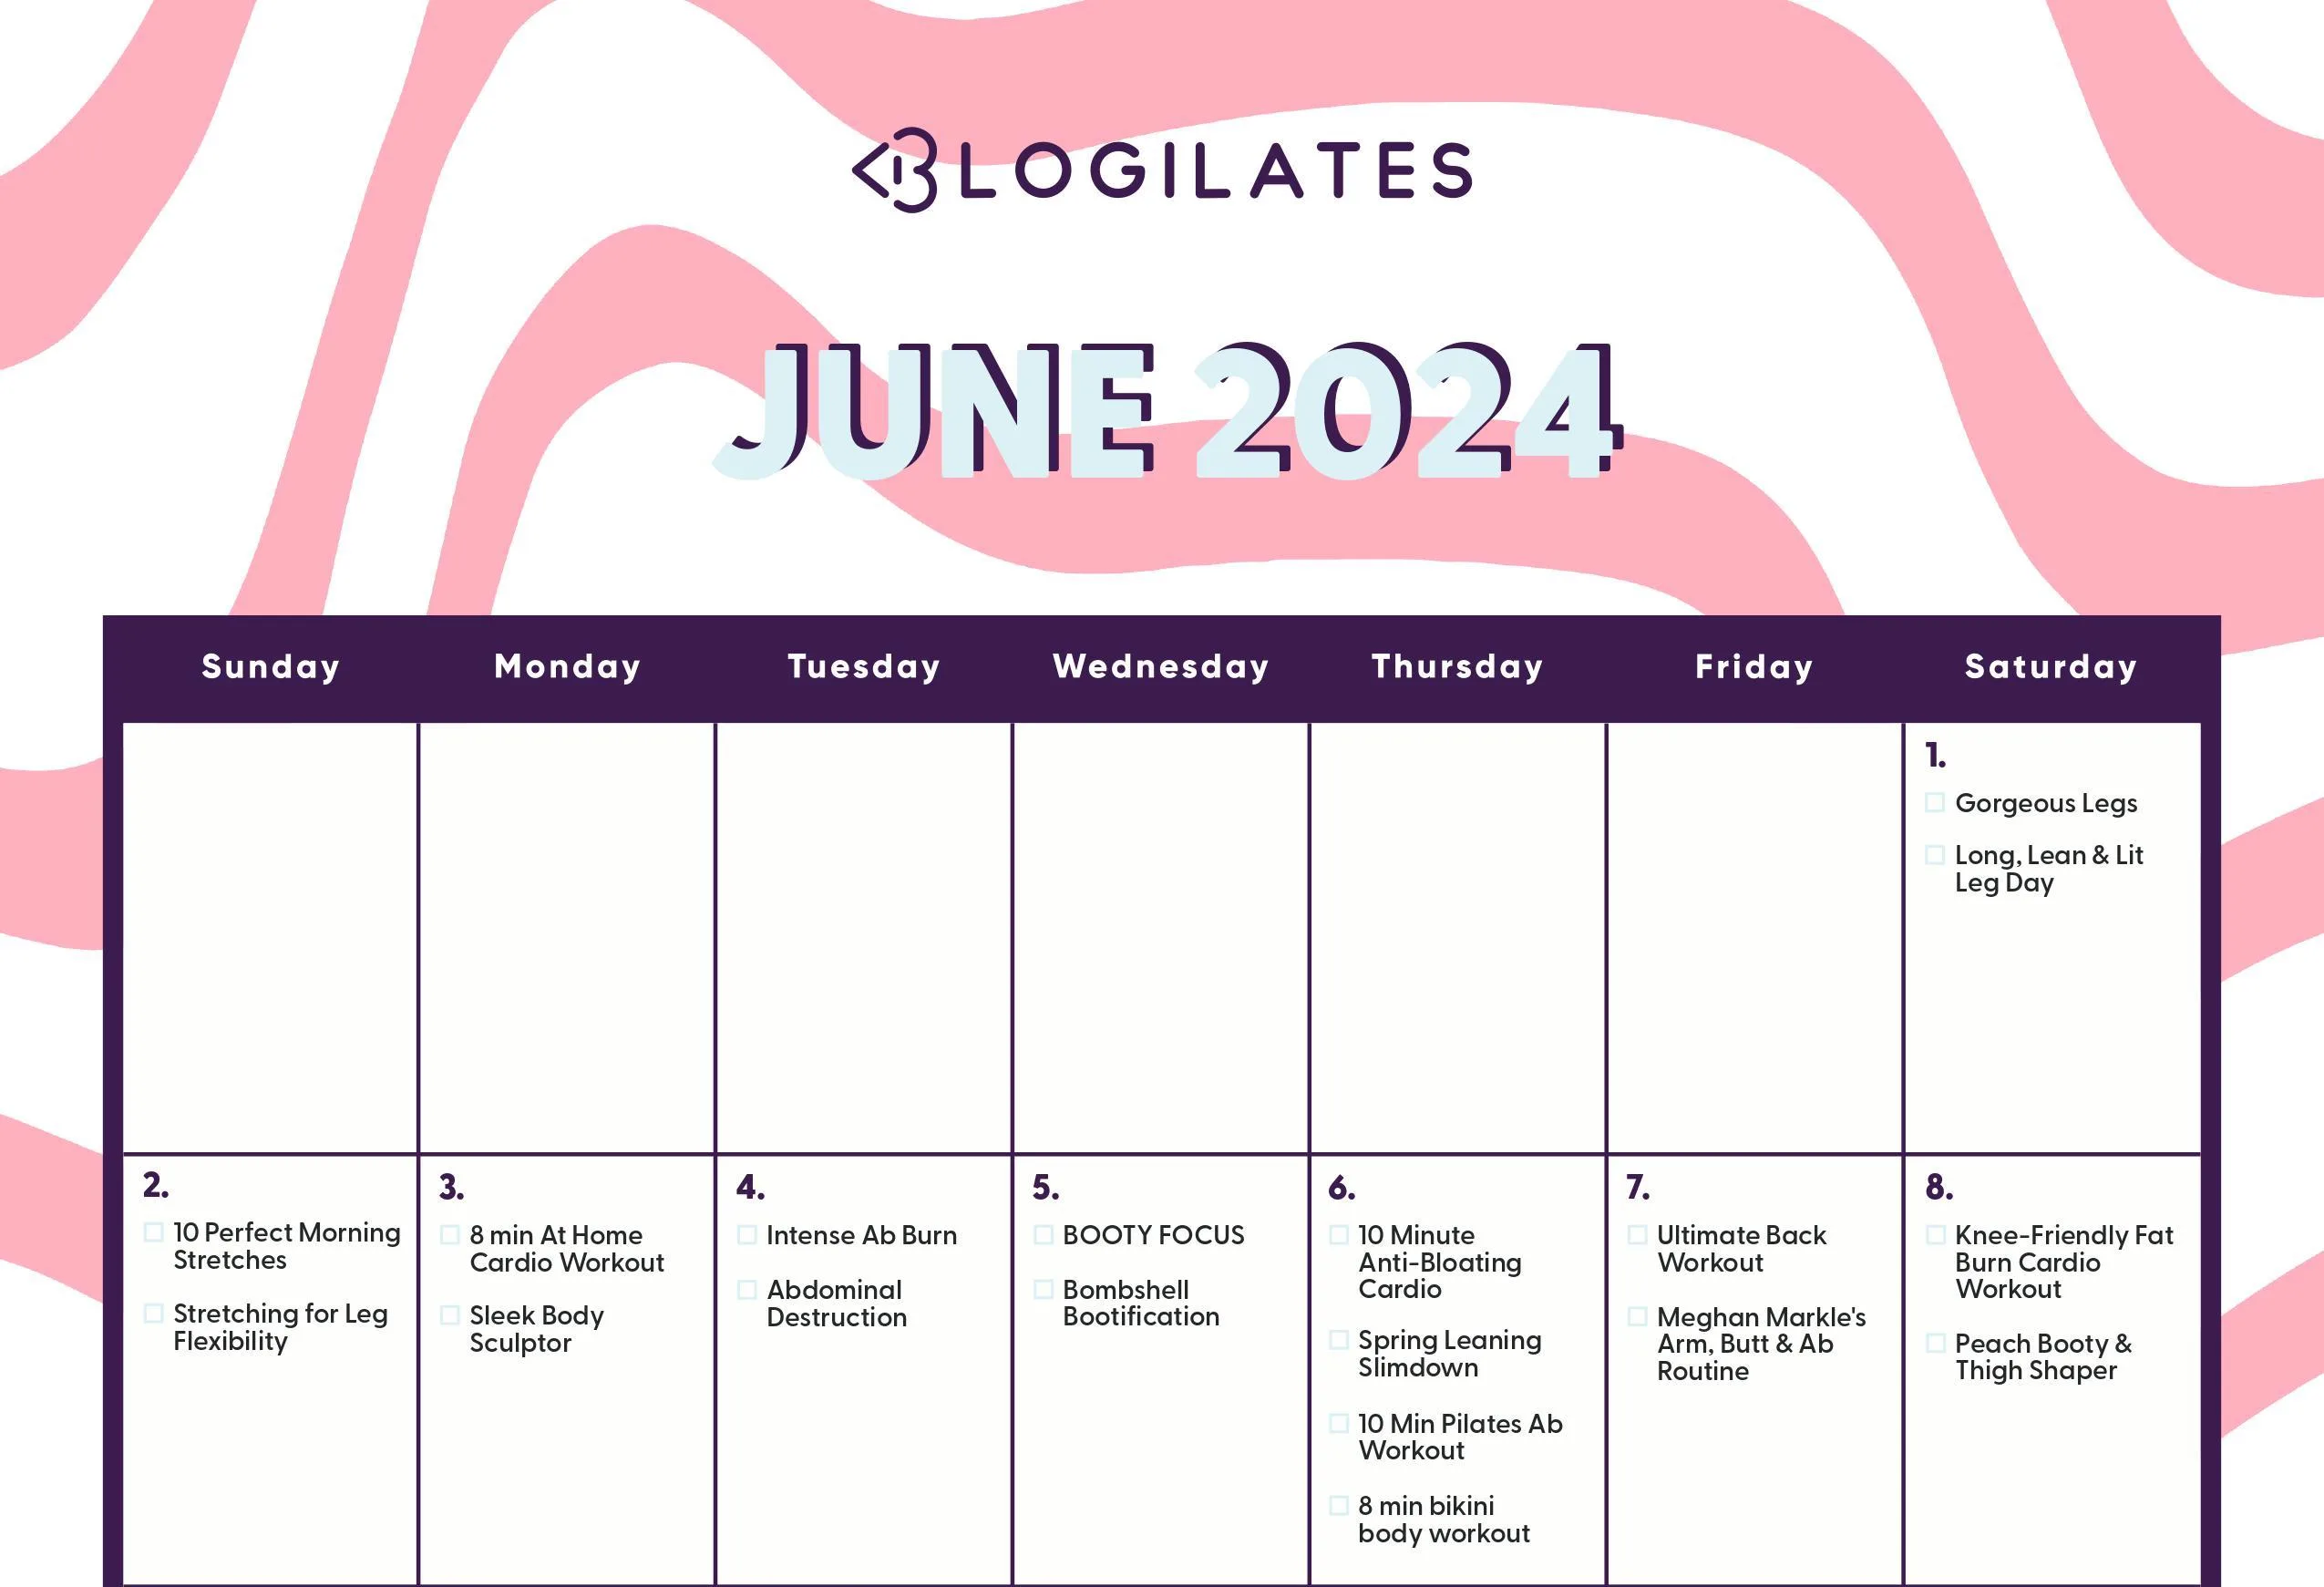 Your Blogilates June 2024 Workout Calendar!!